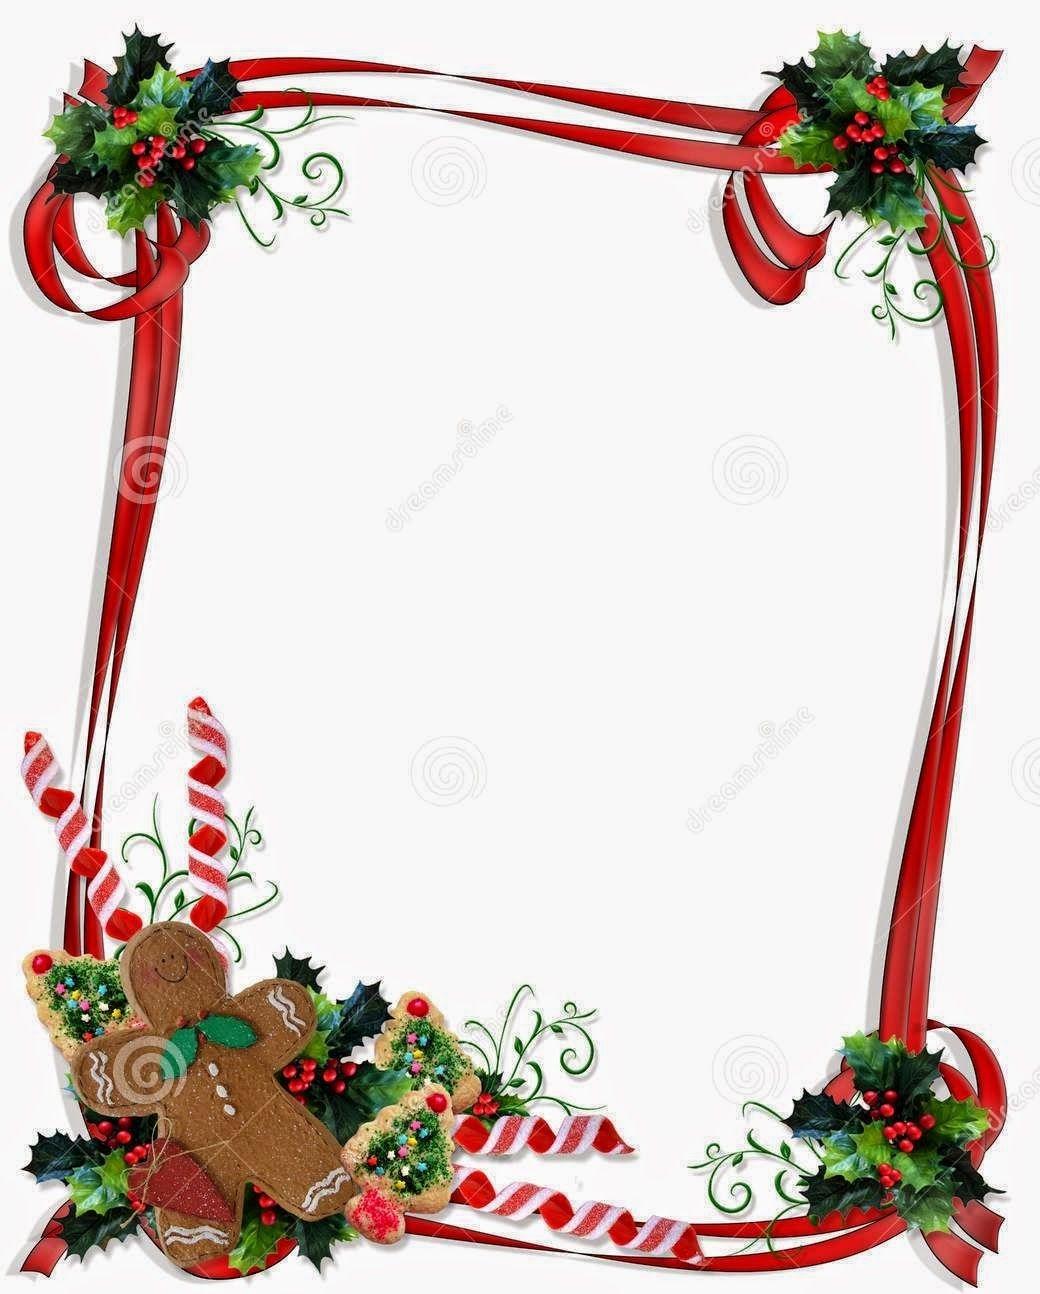 Free Printable Christmas Paper Stationery Google Search Free Christmas Borders Christmas Card Templates Free Christmas Templates Free - Free Printable Christmas Clip Art